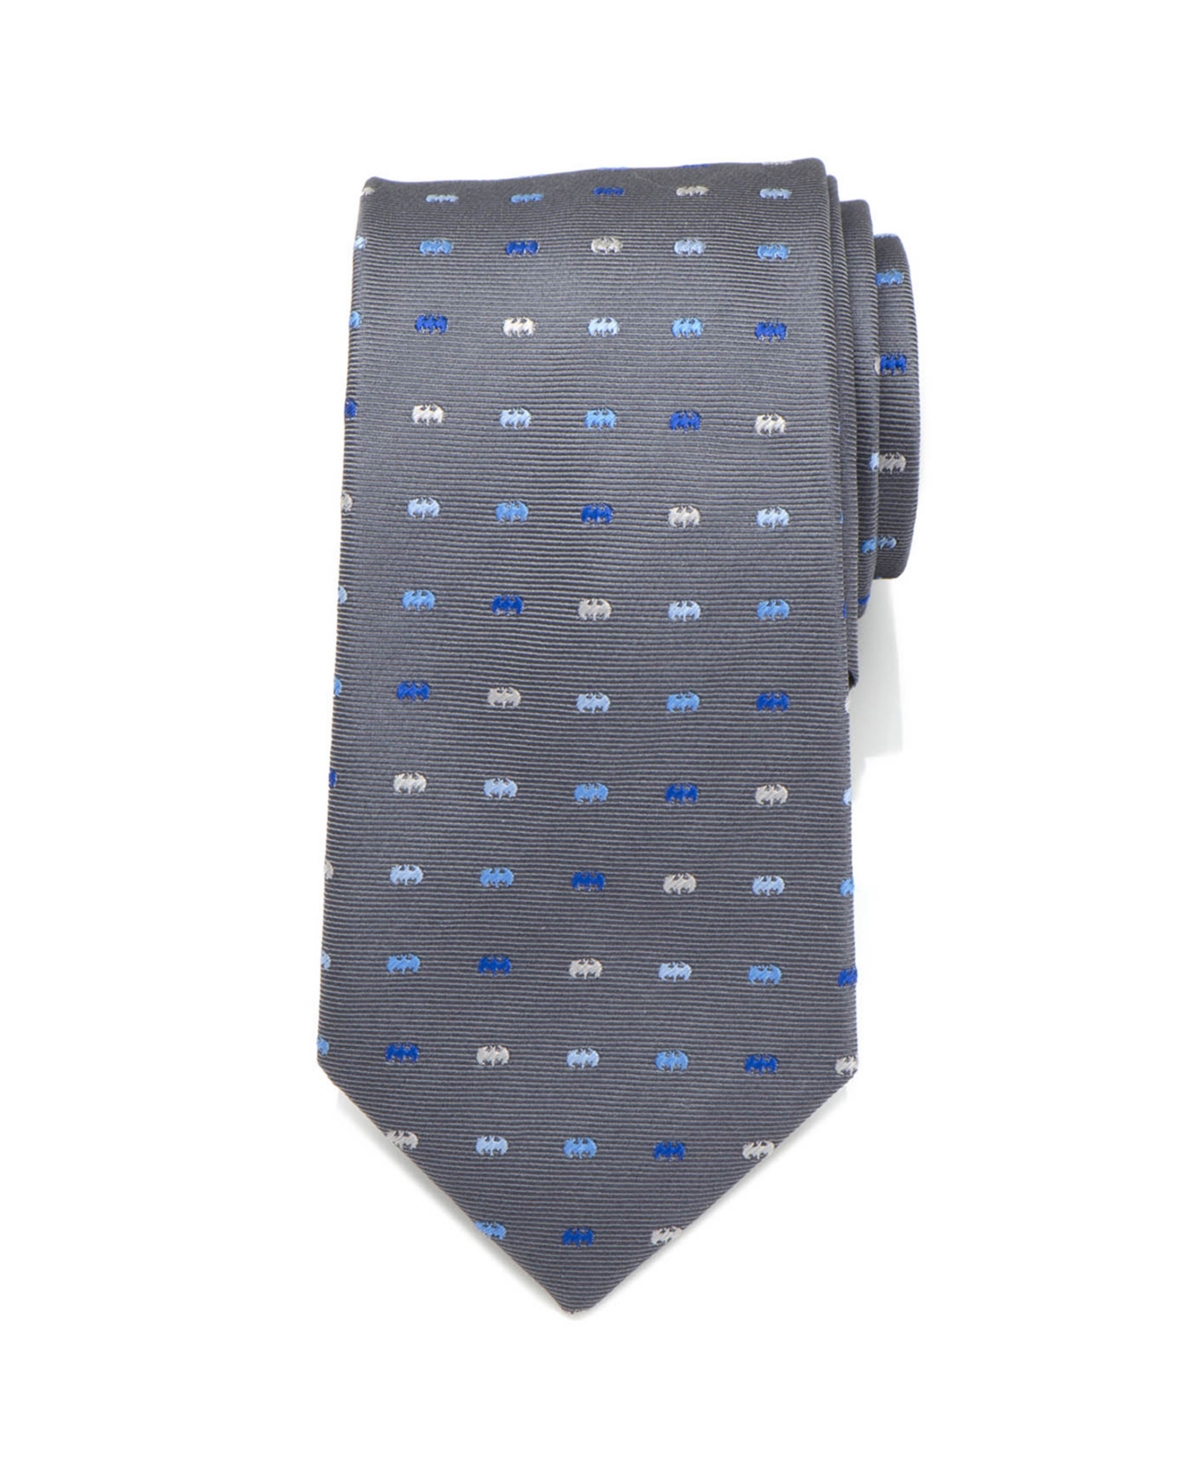 Batman Icon Men's Tie - Gray